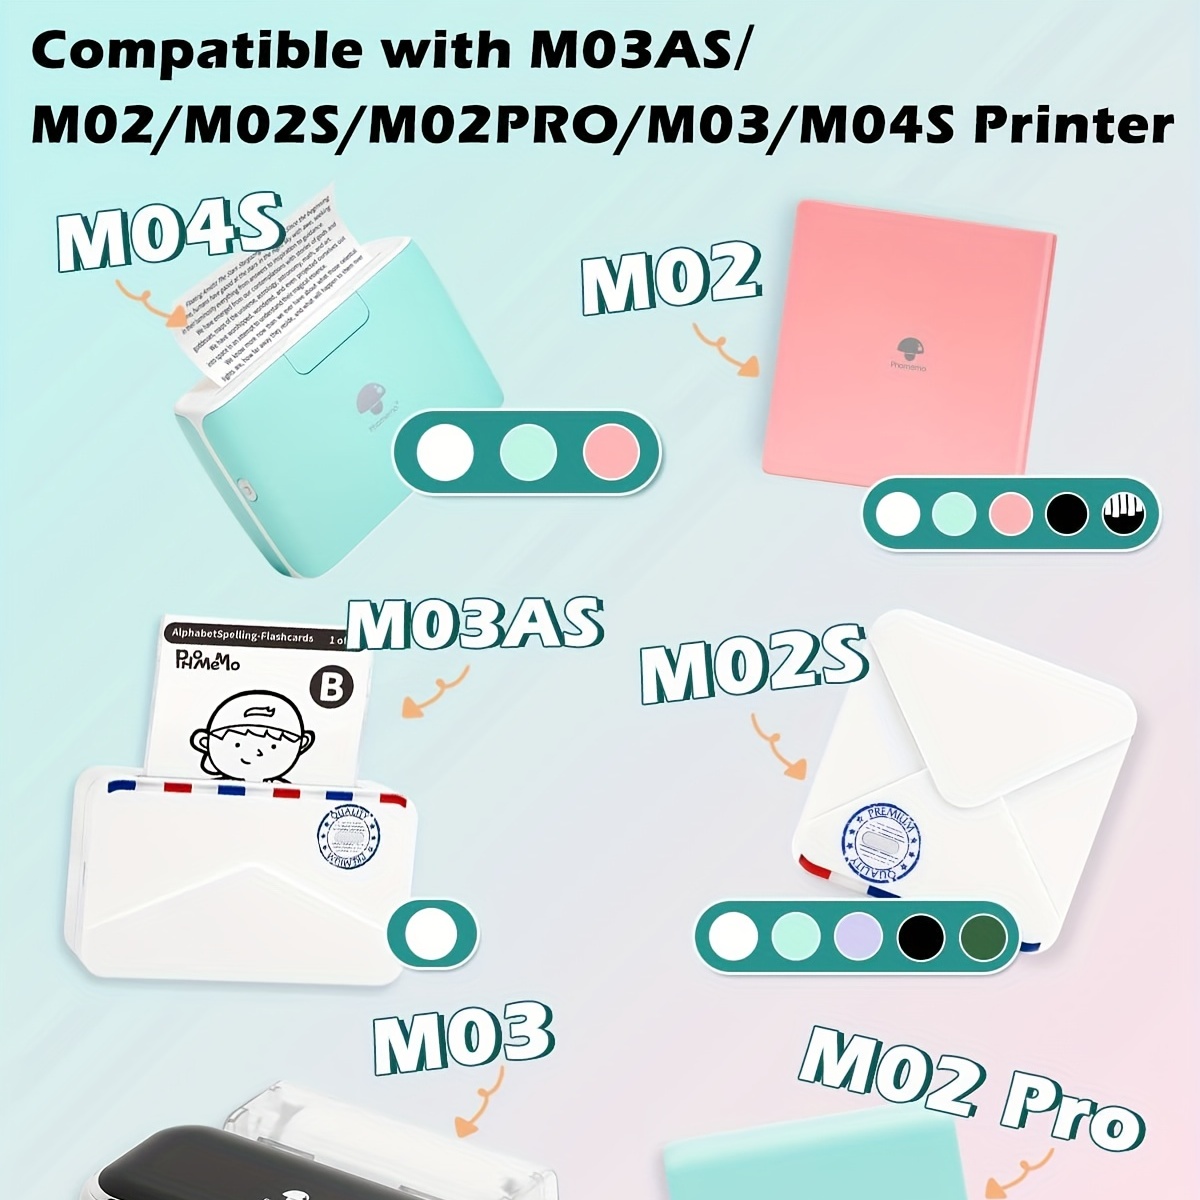 3 Rolls Phomemo Semi-transparent Sticker Thermal Paper, Self-adhesive For  For Phomemo M02/m02 Pro/m02s/m03/m04s/m03as Mini Pocket Printer, 50mm X  98.43inch, Diameter 30mm - Office & School Supplies - Temu